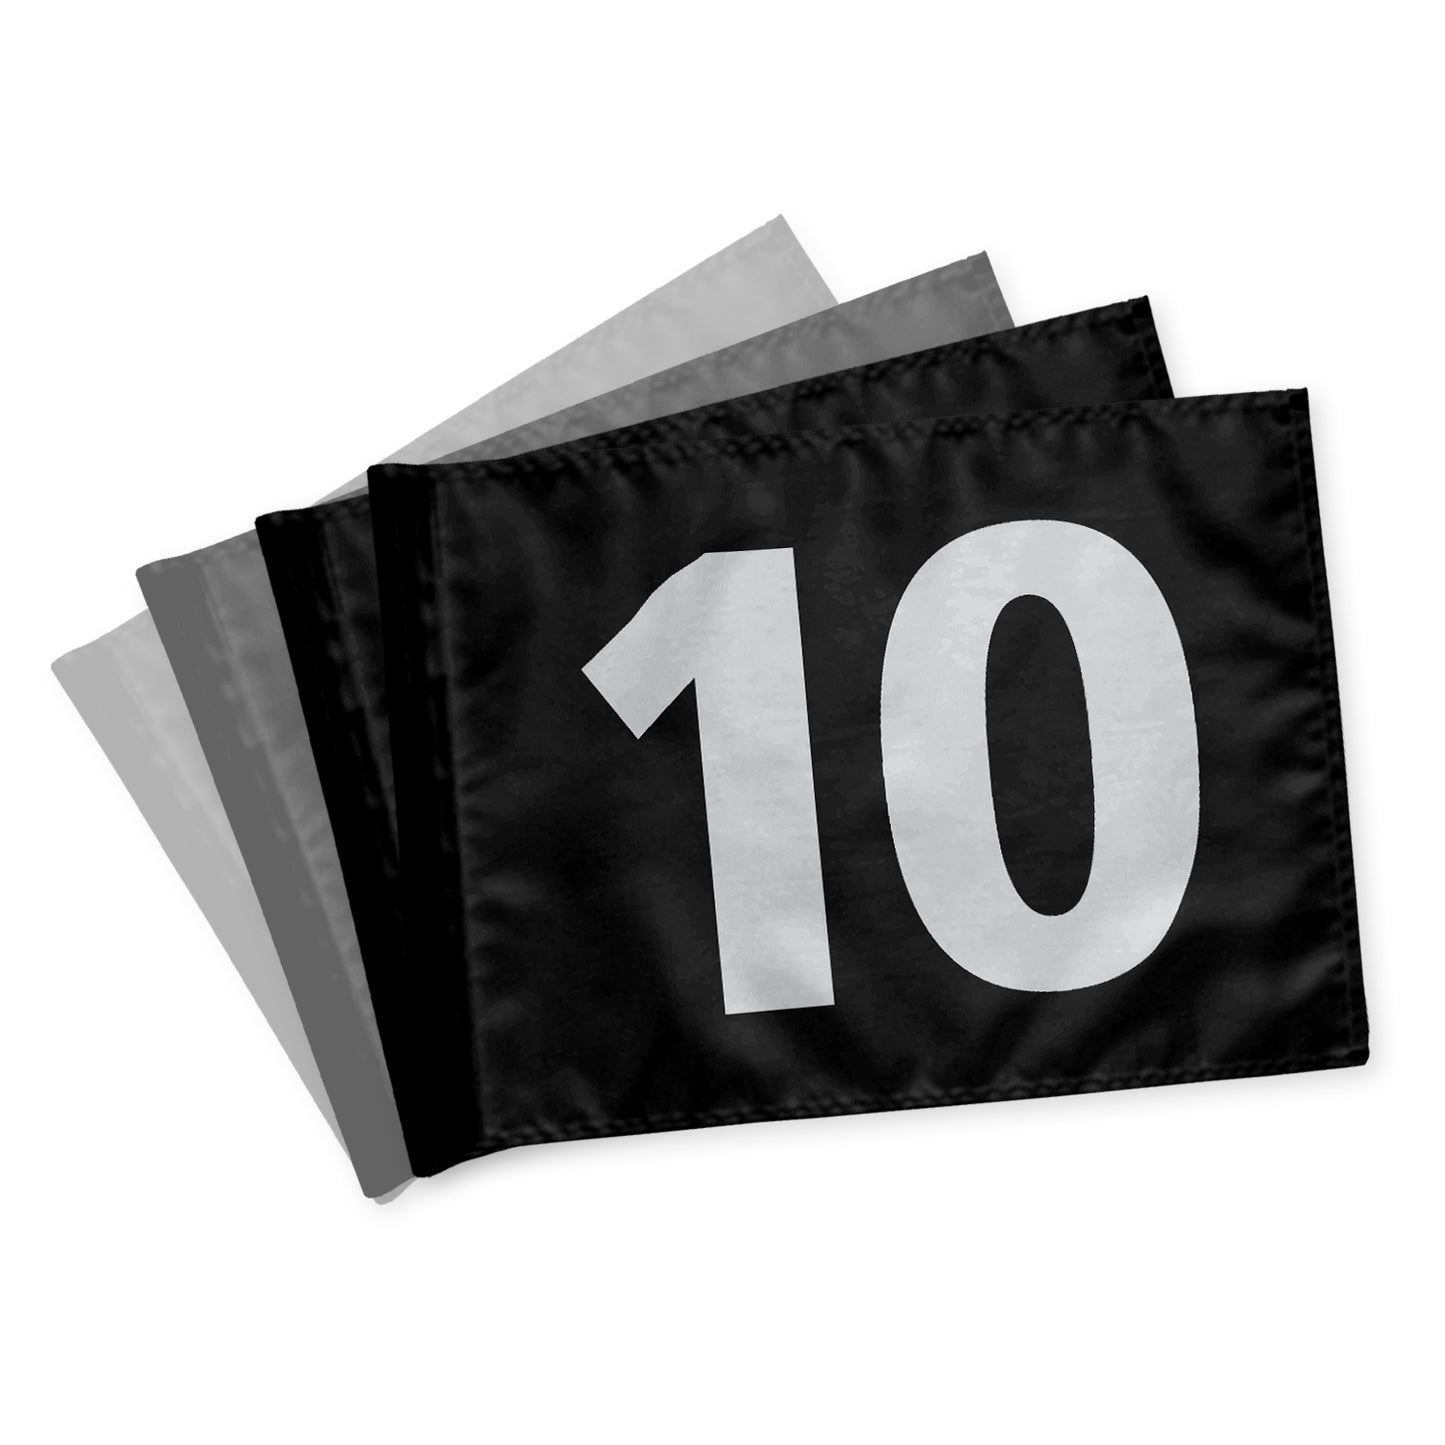 Puttinggreen flagga 10-18, styv, svart med vita siffror, 200 gram flaggduk